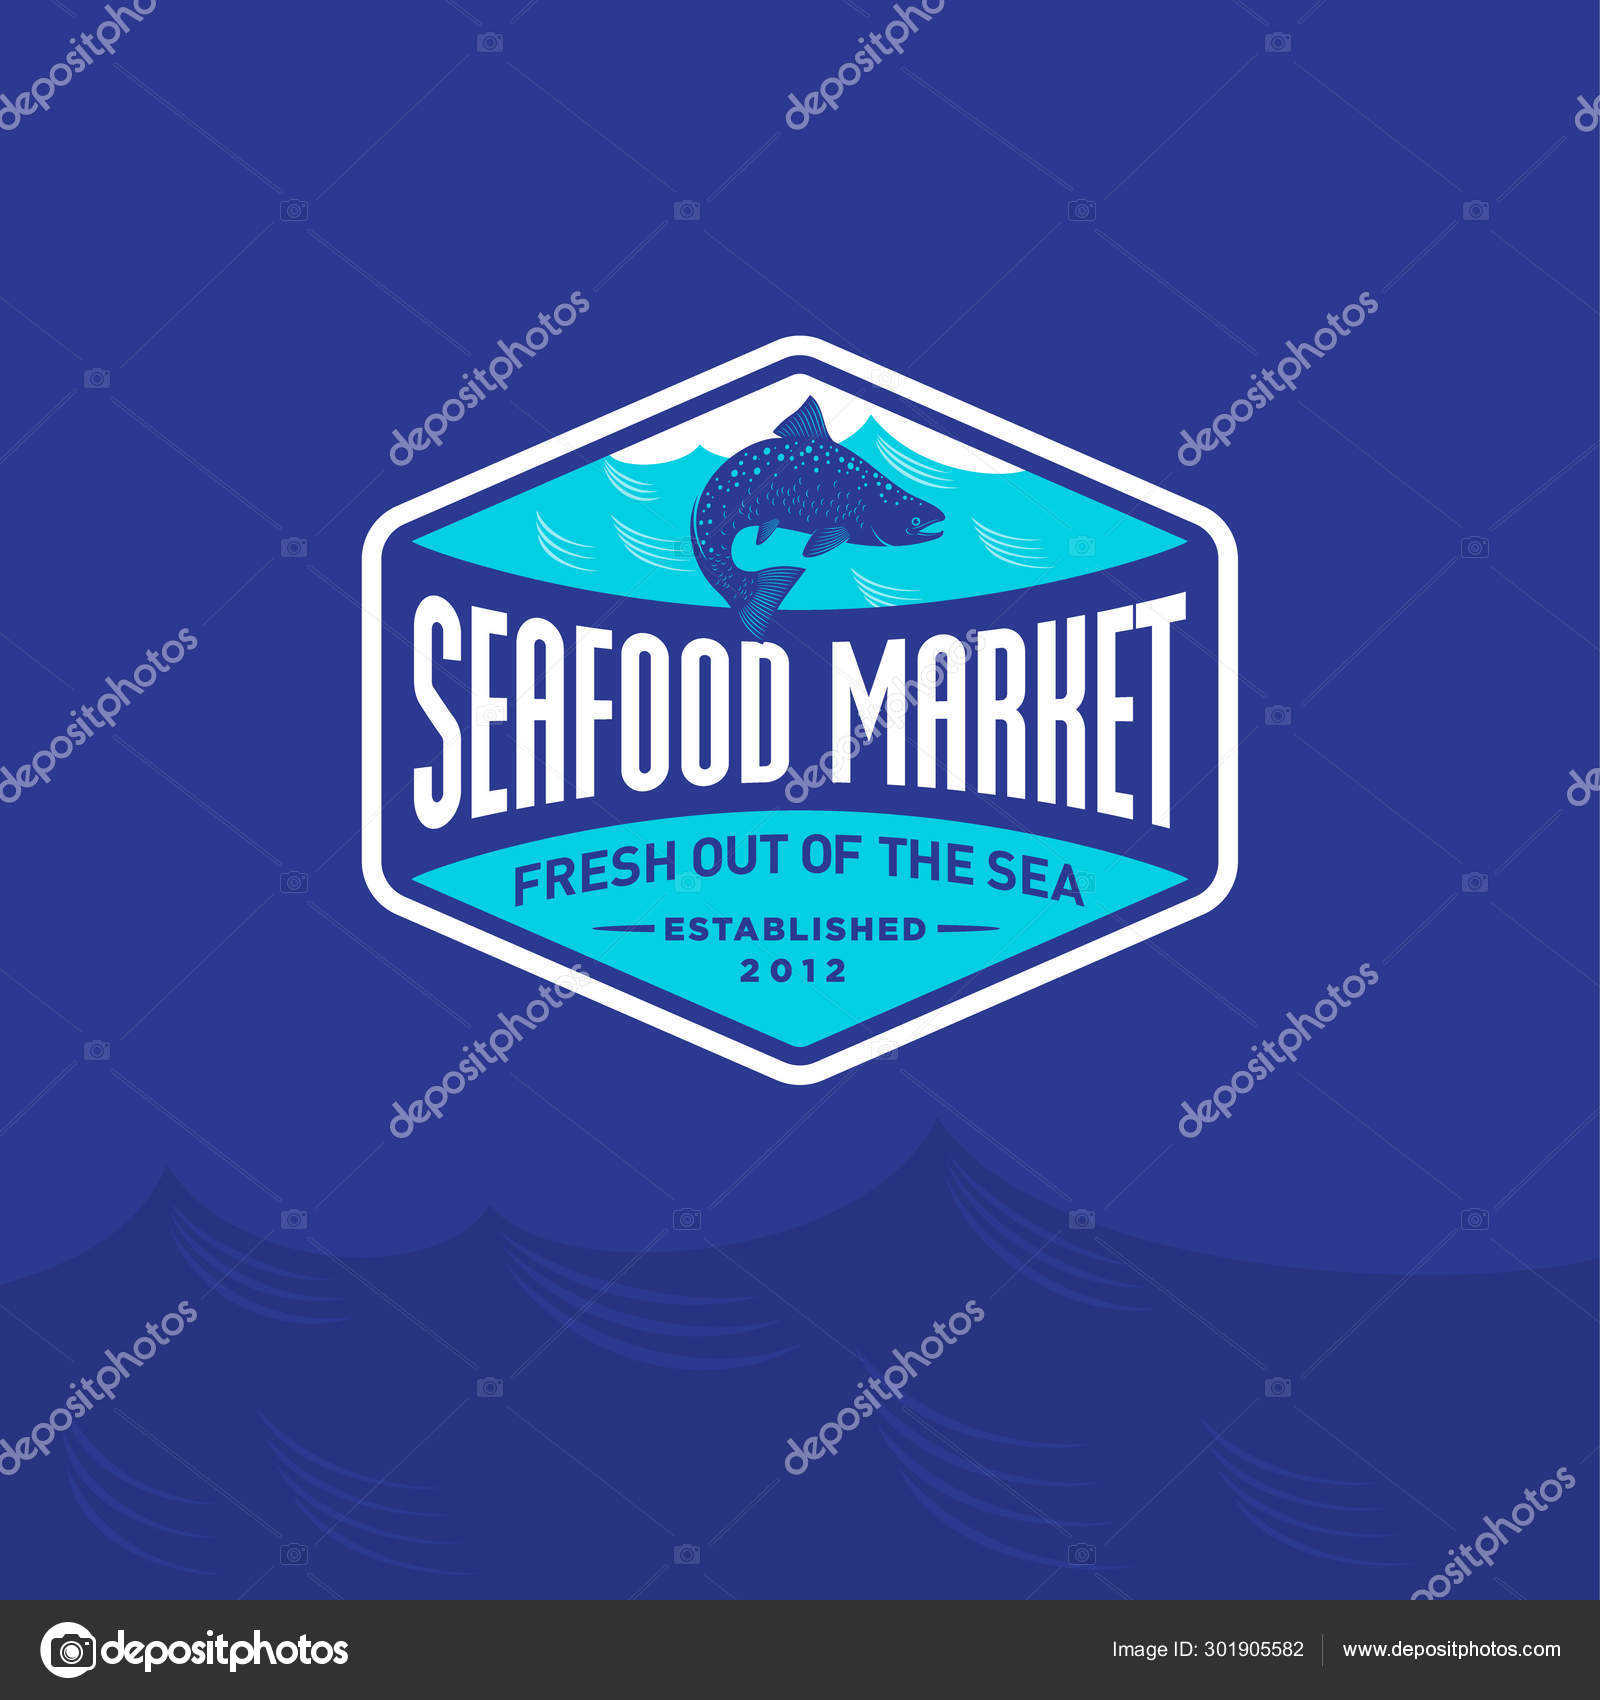 Seafood Market Restaurant Logo Blue Salmon Fish Silhouette Blue